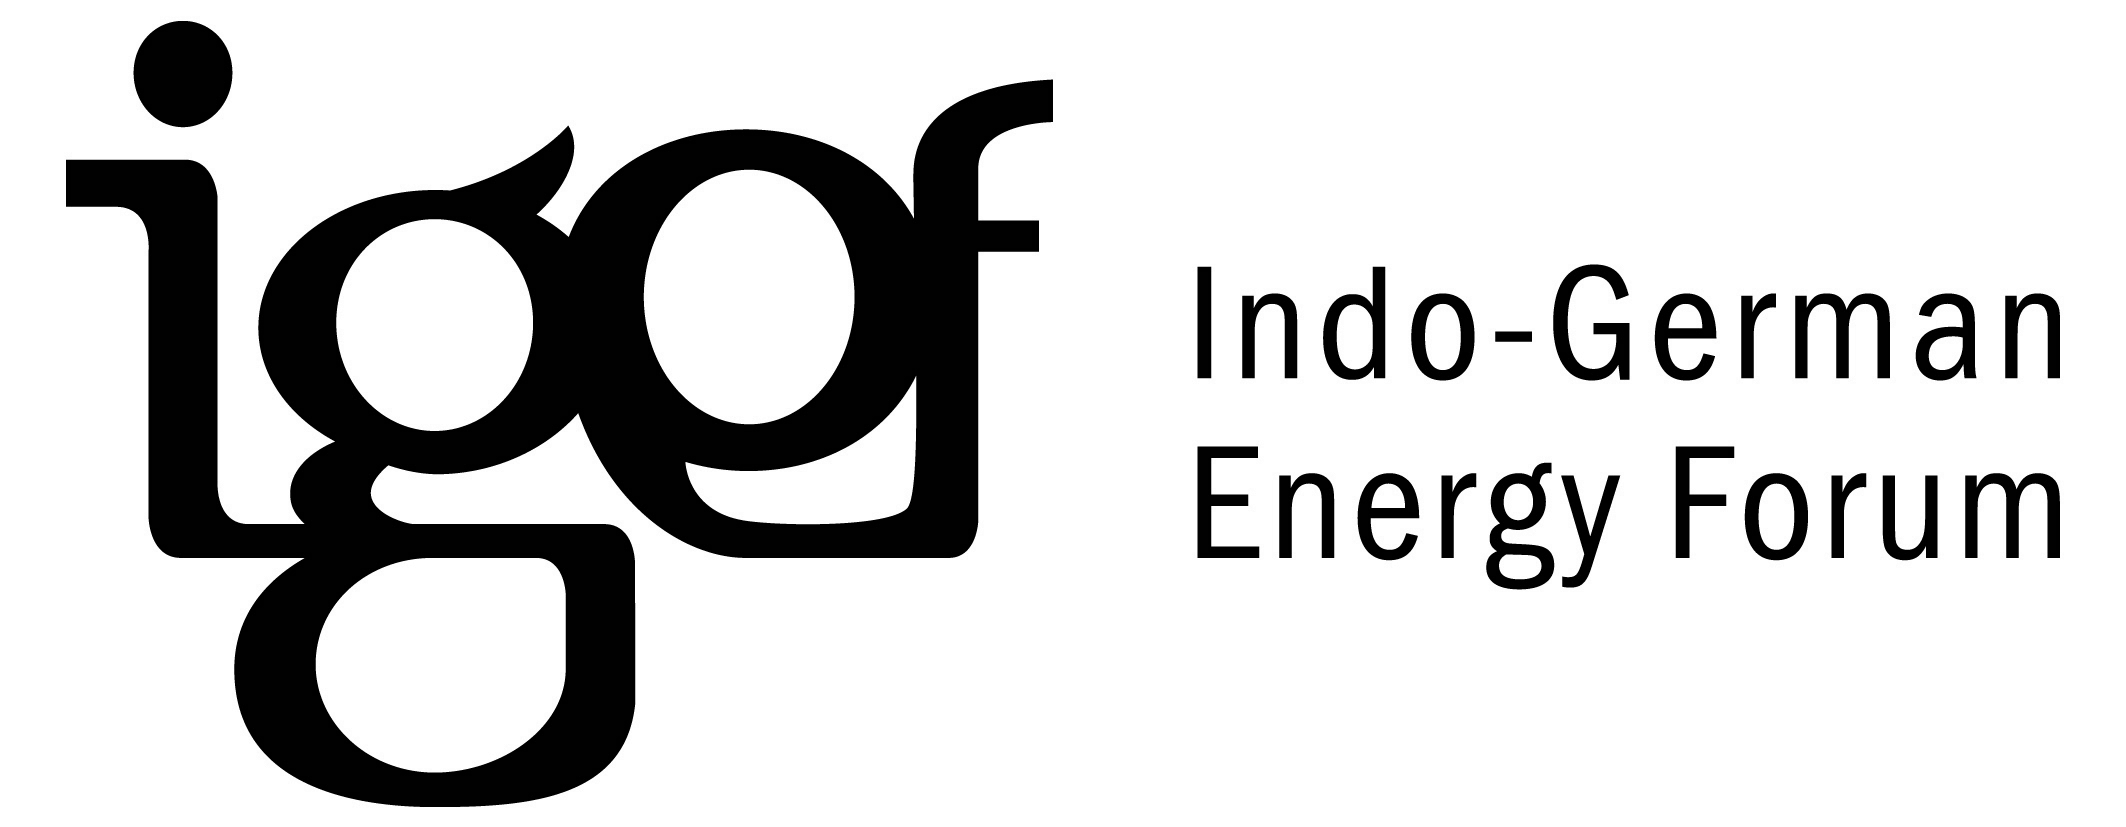 Logo igef_RGB.png